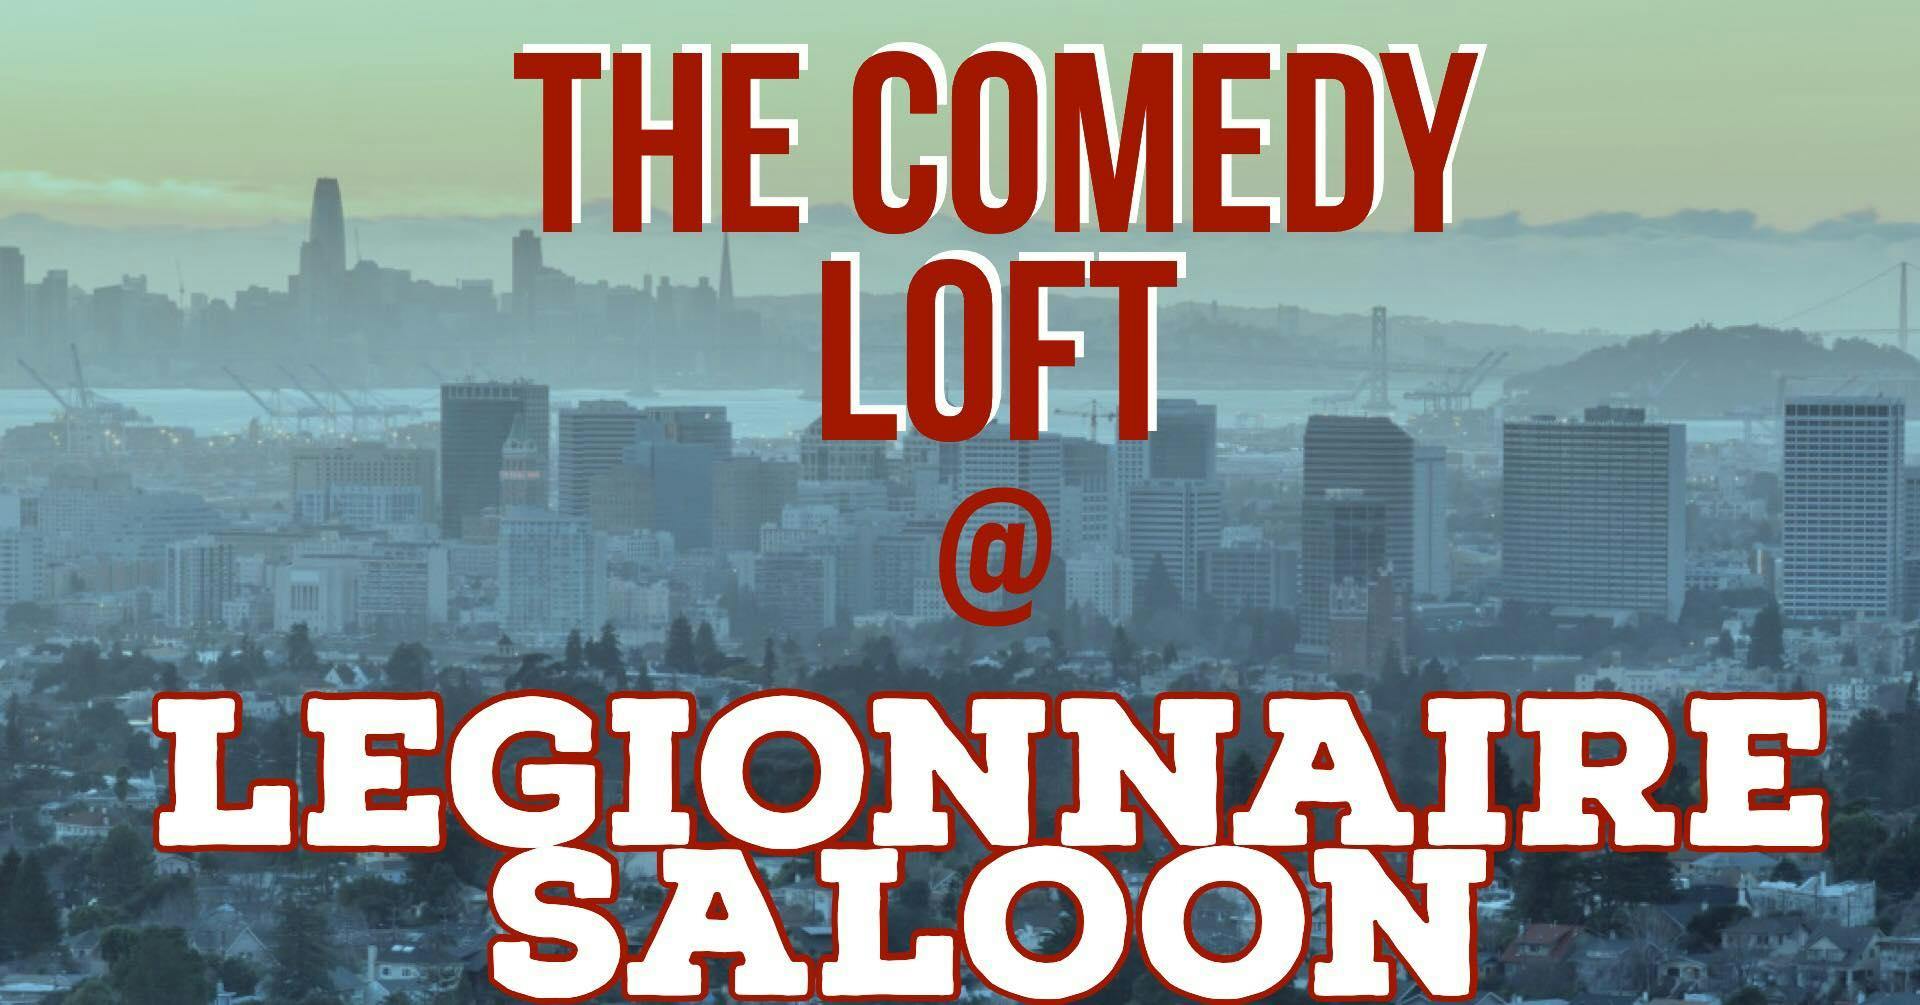 The Comedy Loft at Legionnaire Saloon